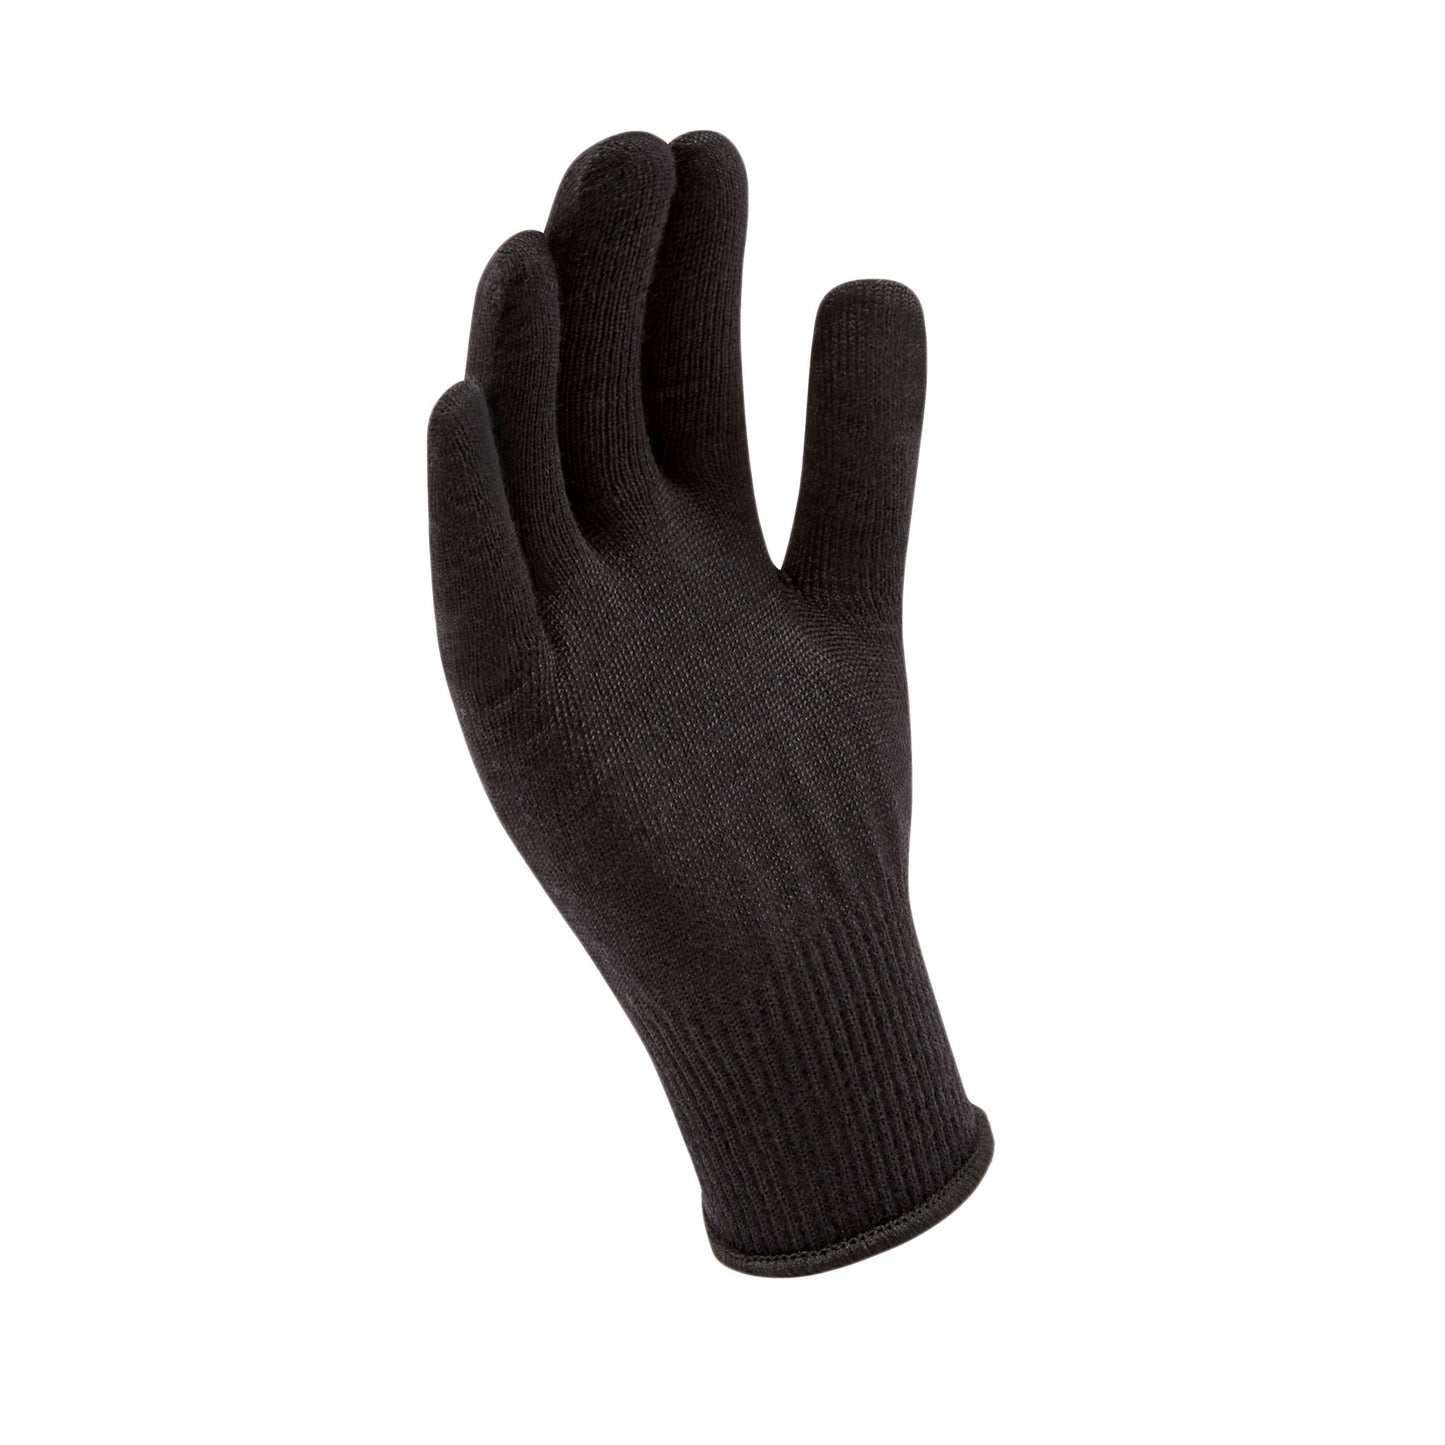 Seal Skinz Solo Merino Liner Glove One Size